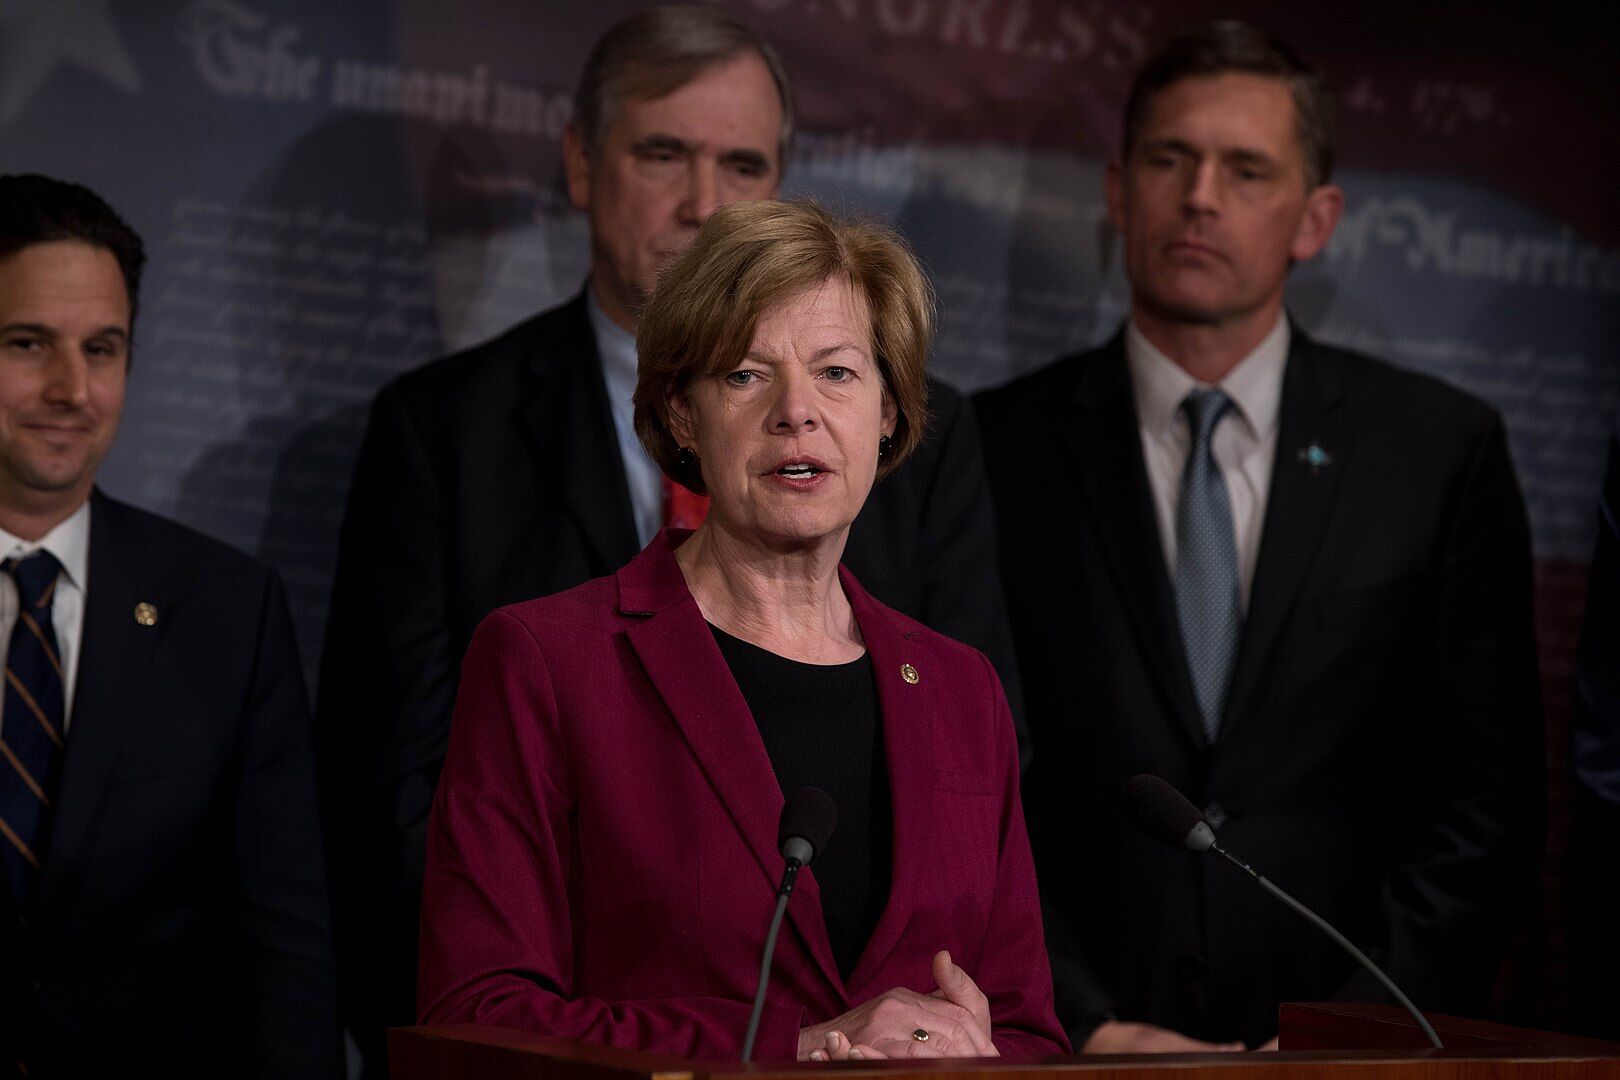 Sen. Tammy Baldwin speaking alongside other Senators at a press conference in 2019.